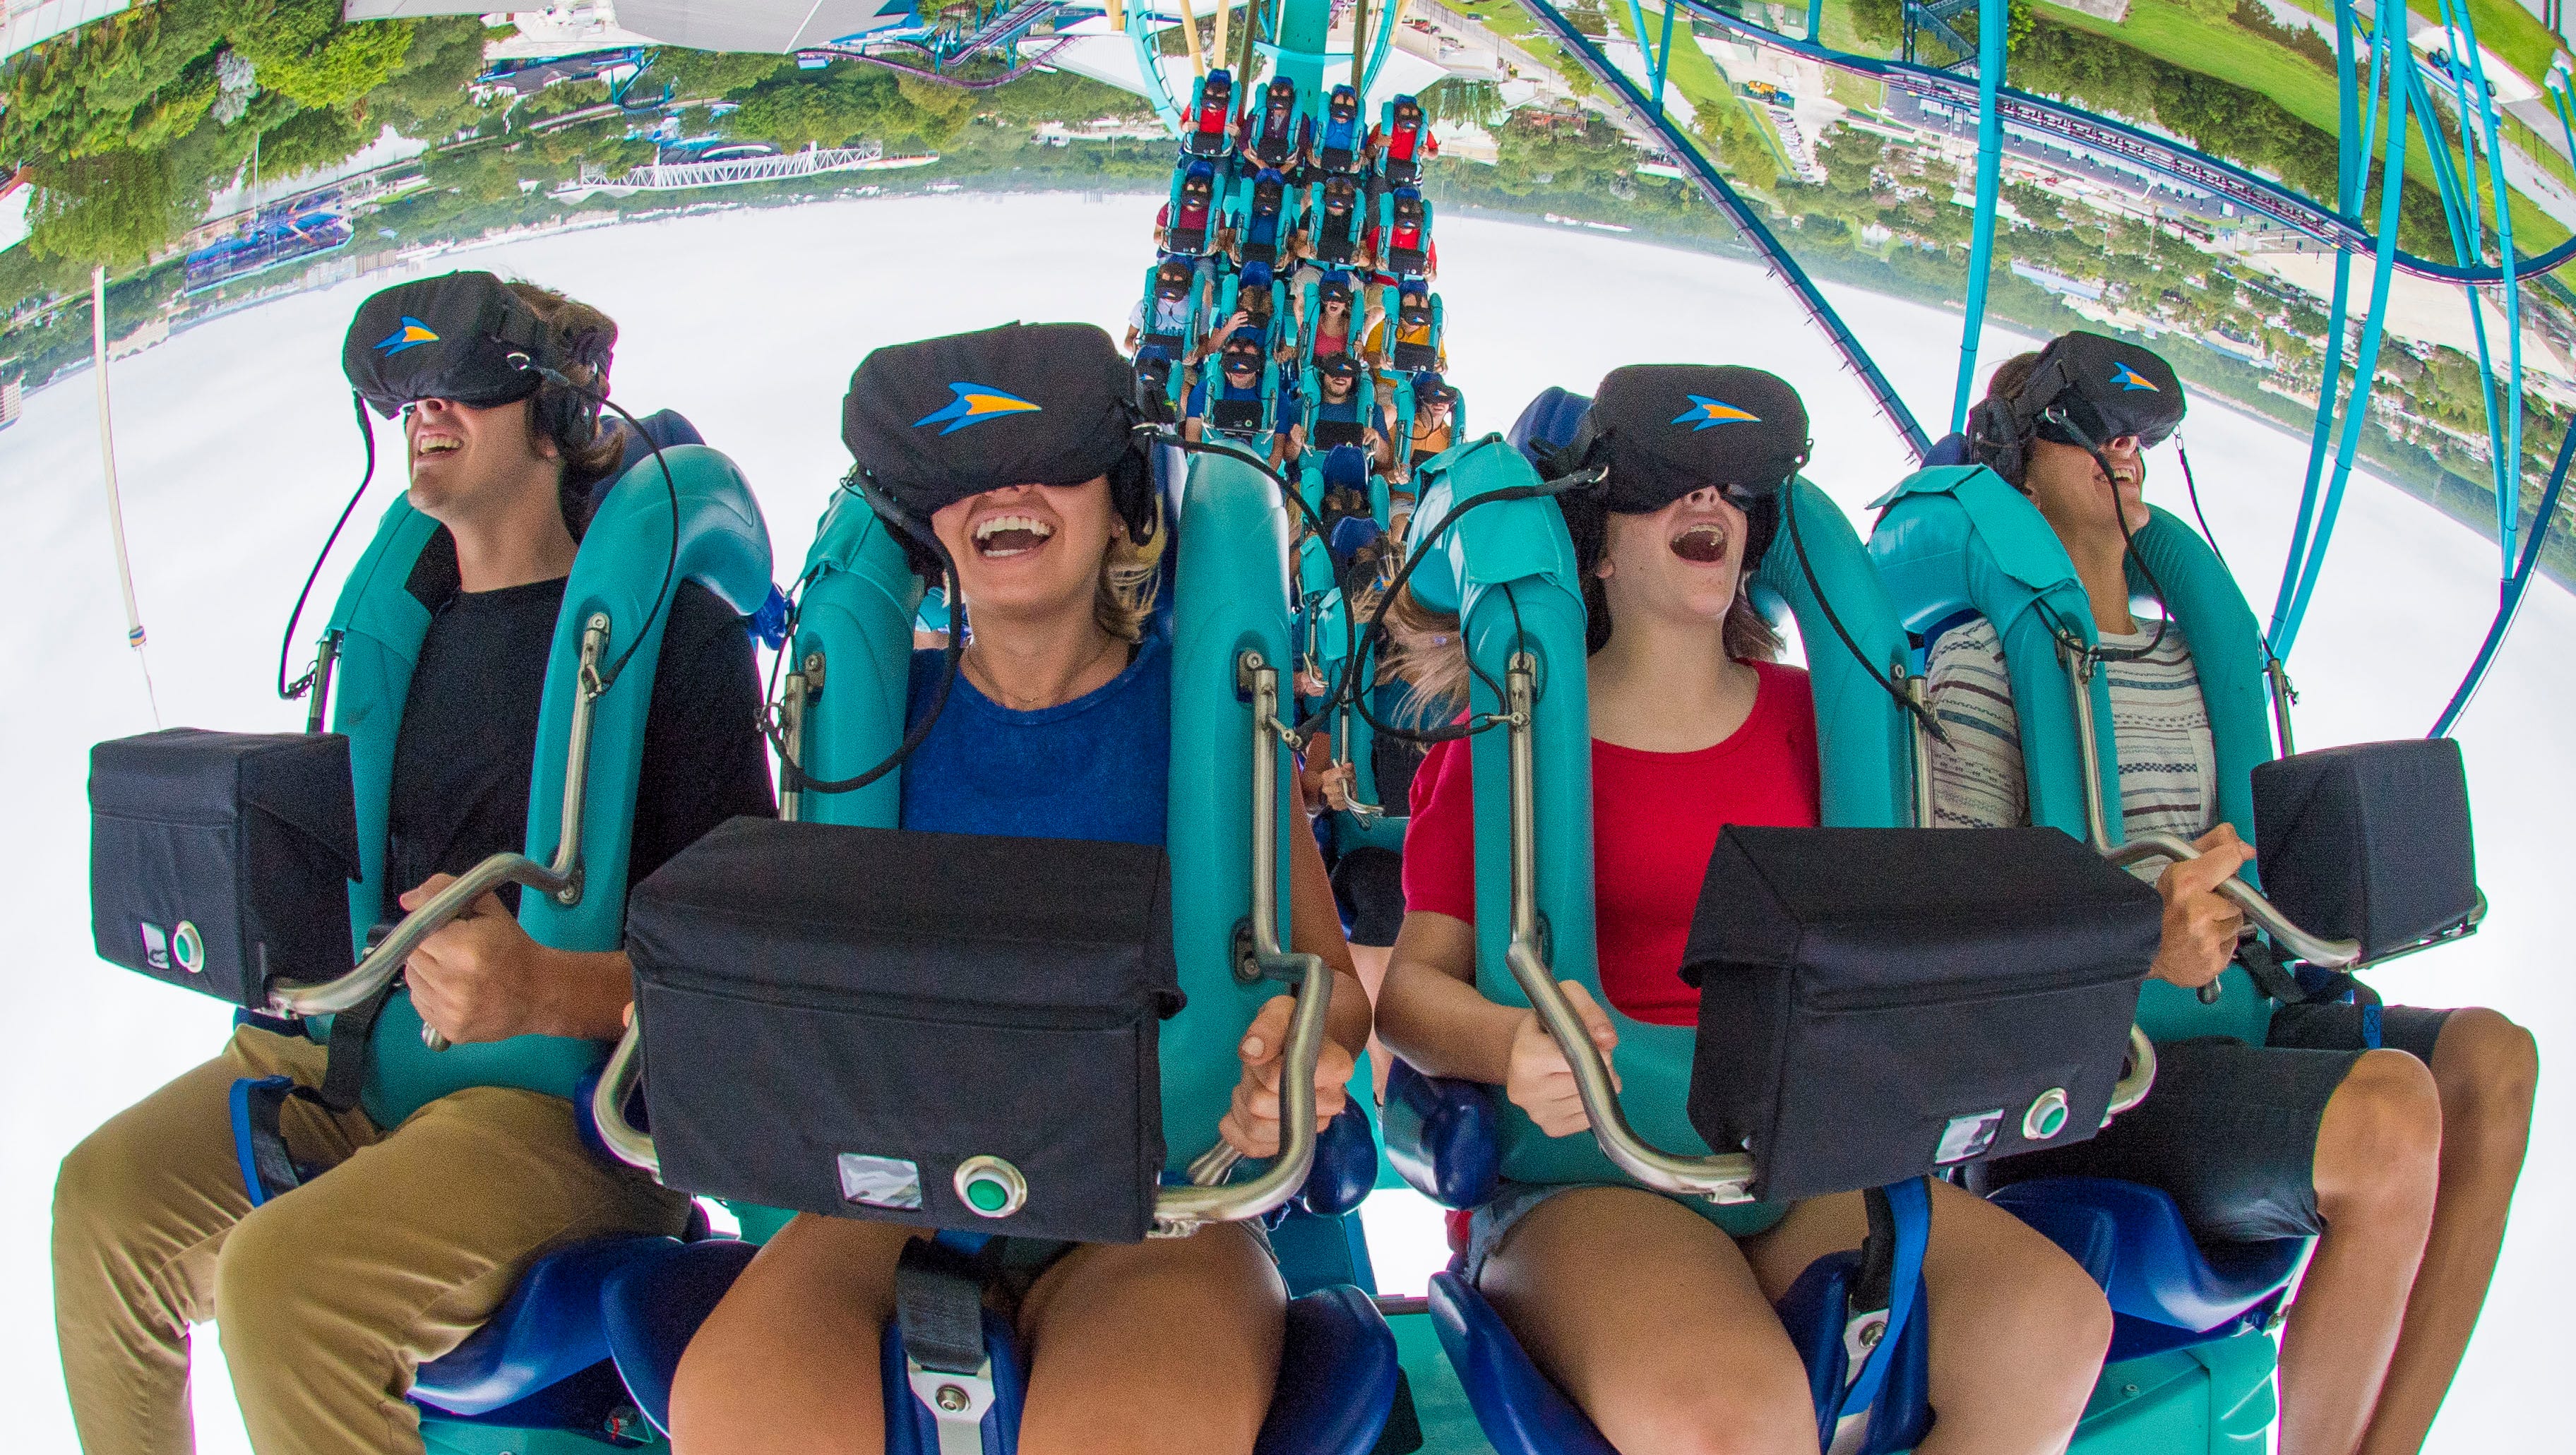 Устройство для развлечений. Устройства для развлечения. Epic Roller Coasters VR. VR Coaster extreme фото.